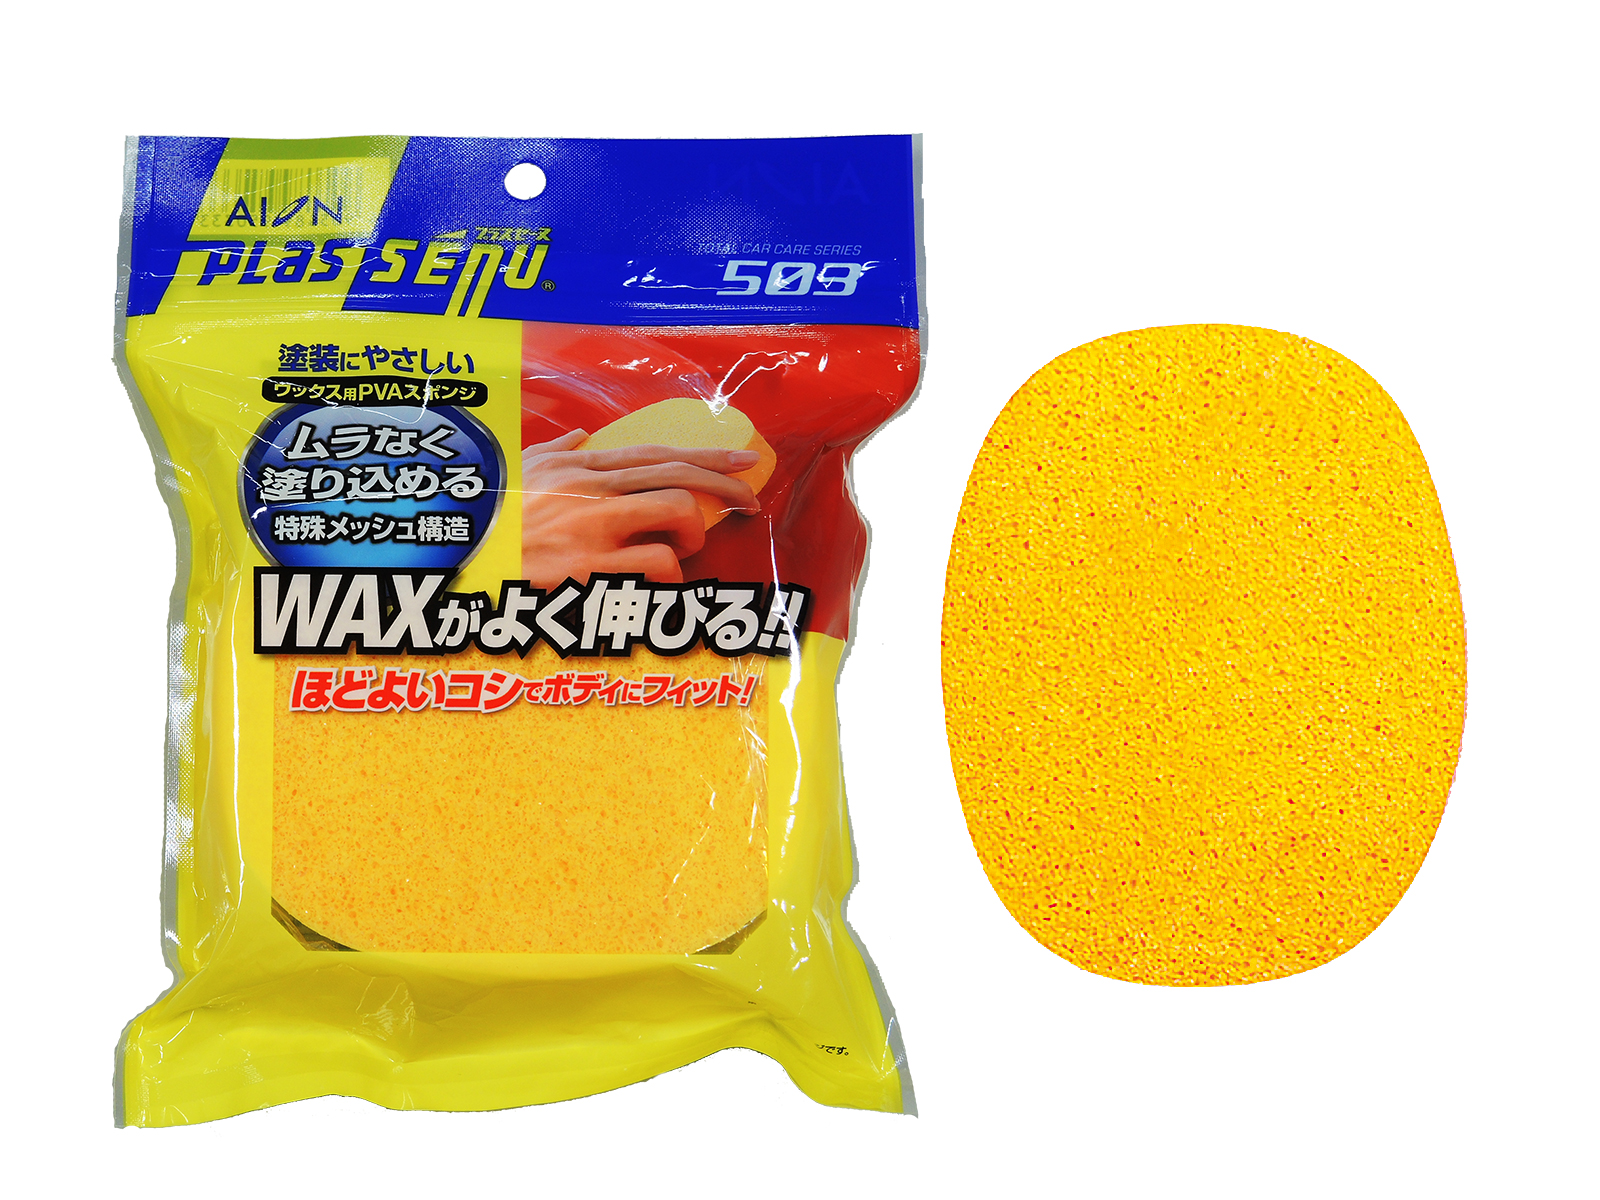 WAX Sponge